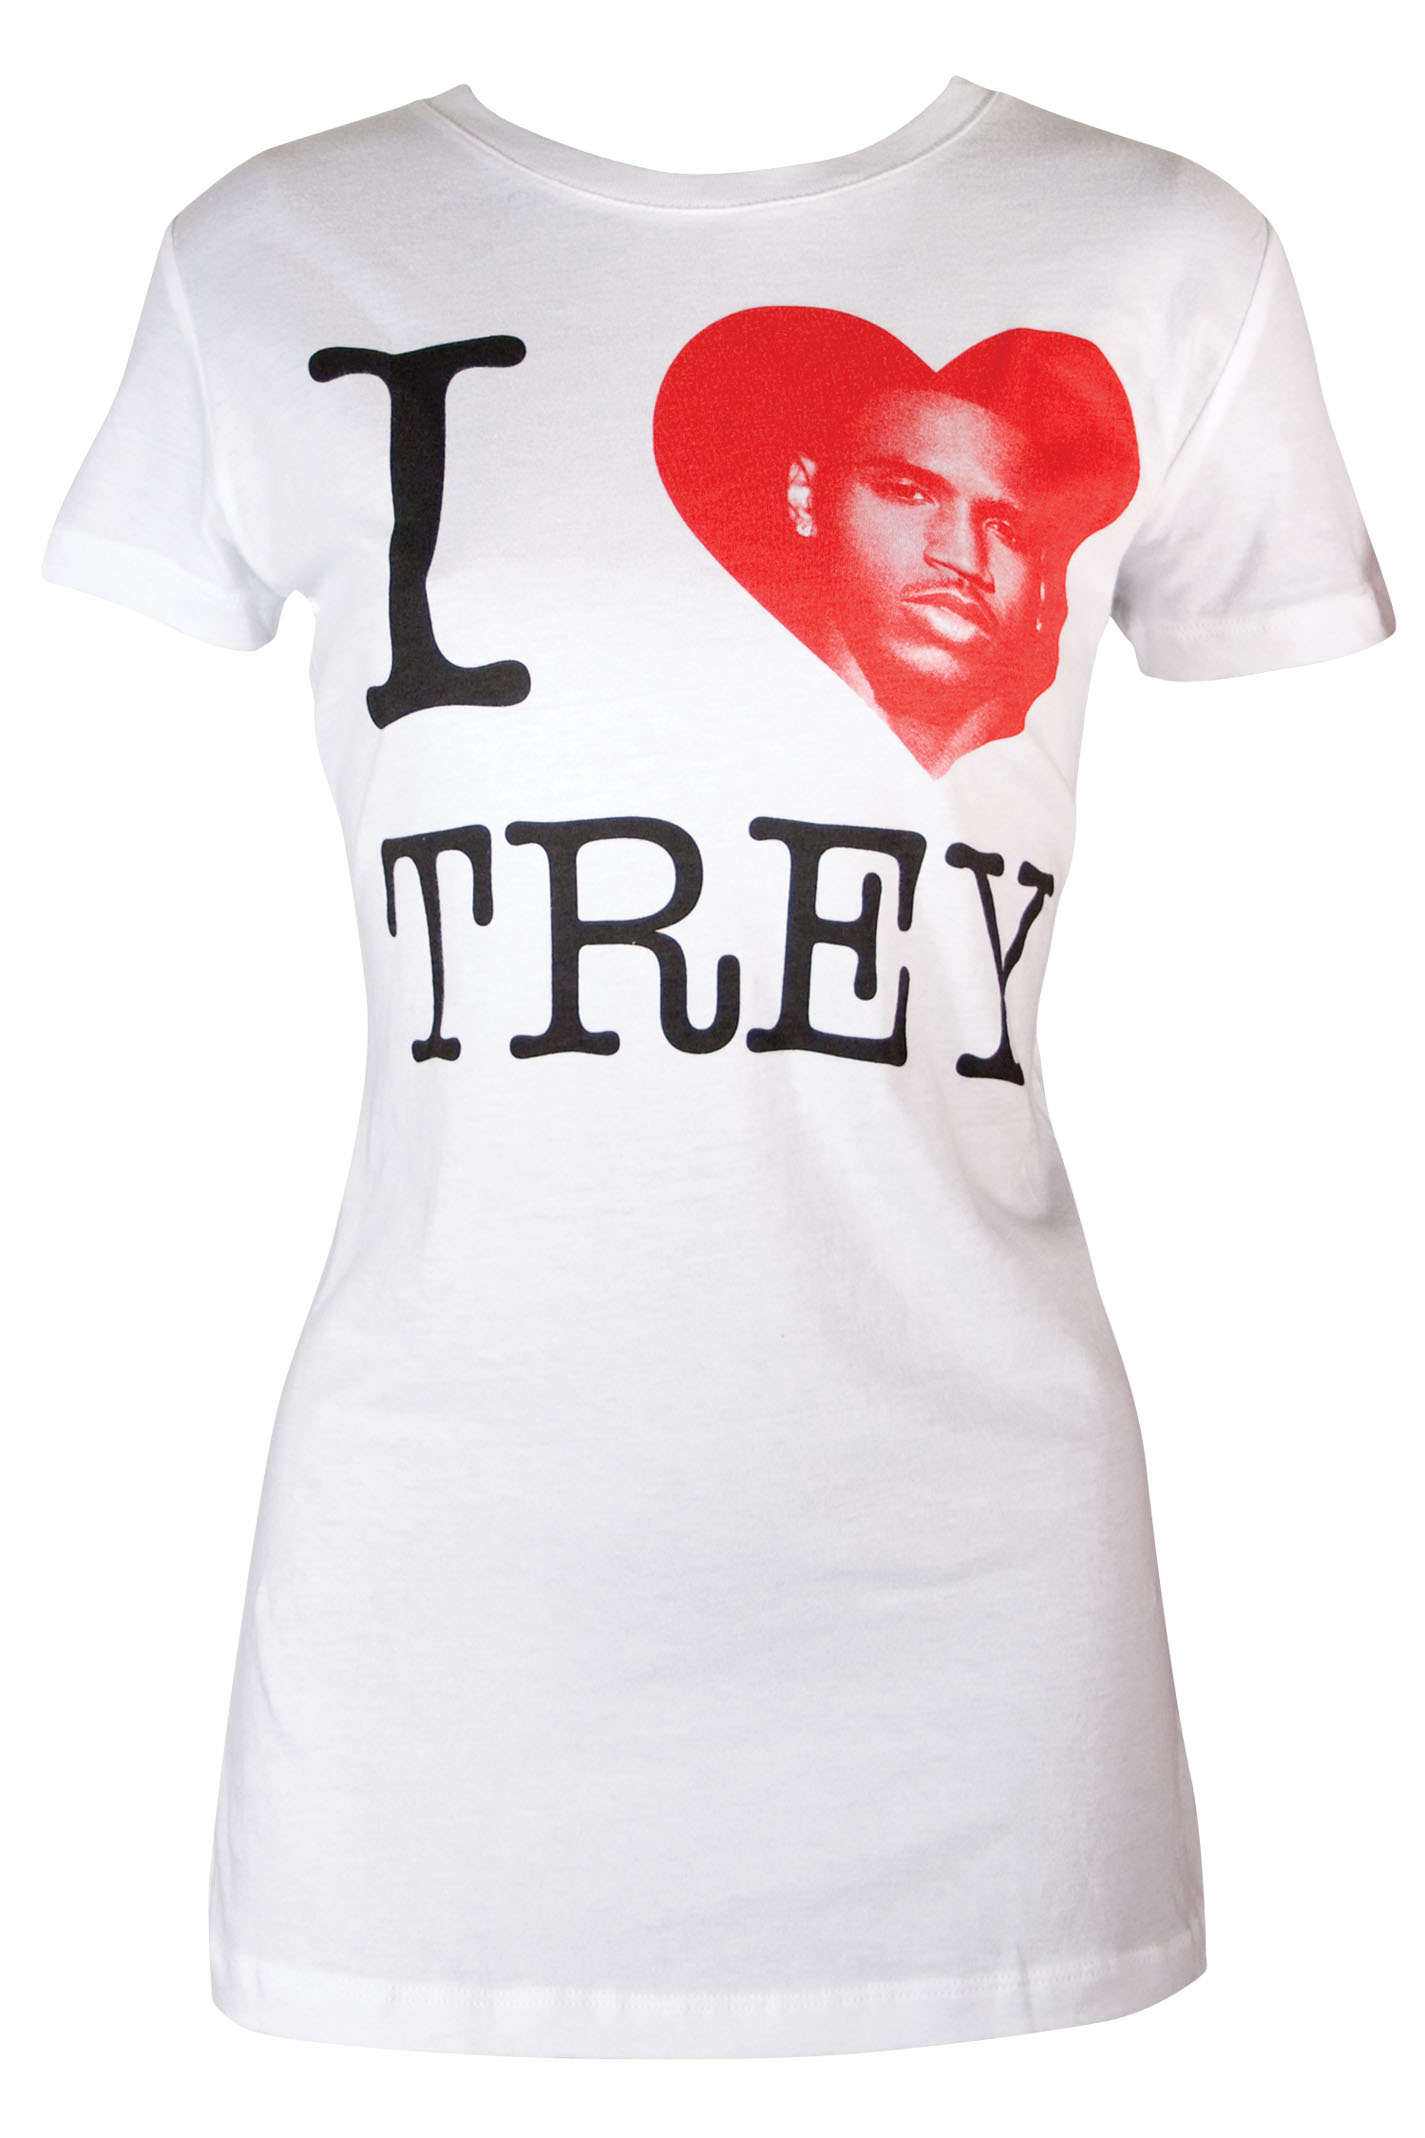 Songz t shirt trey Trey Songz